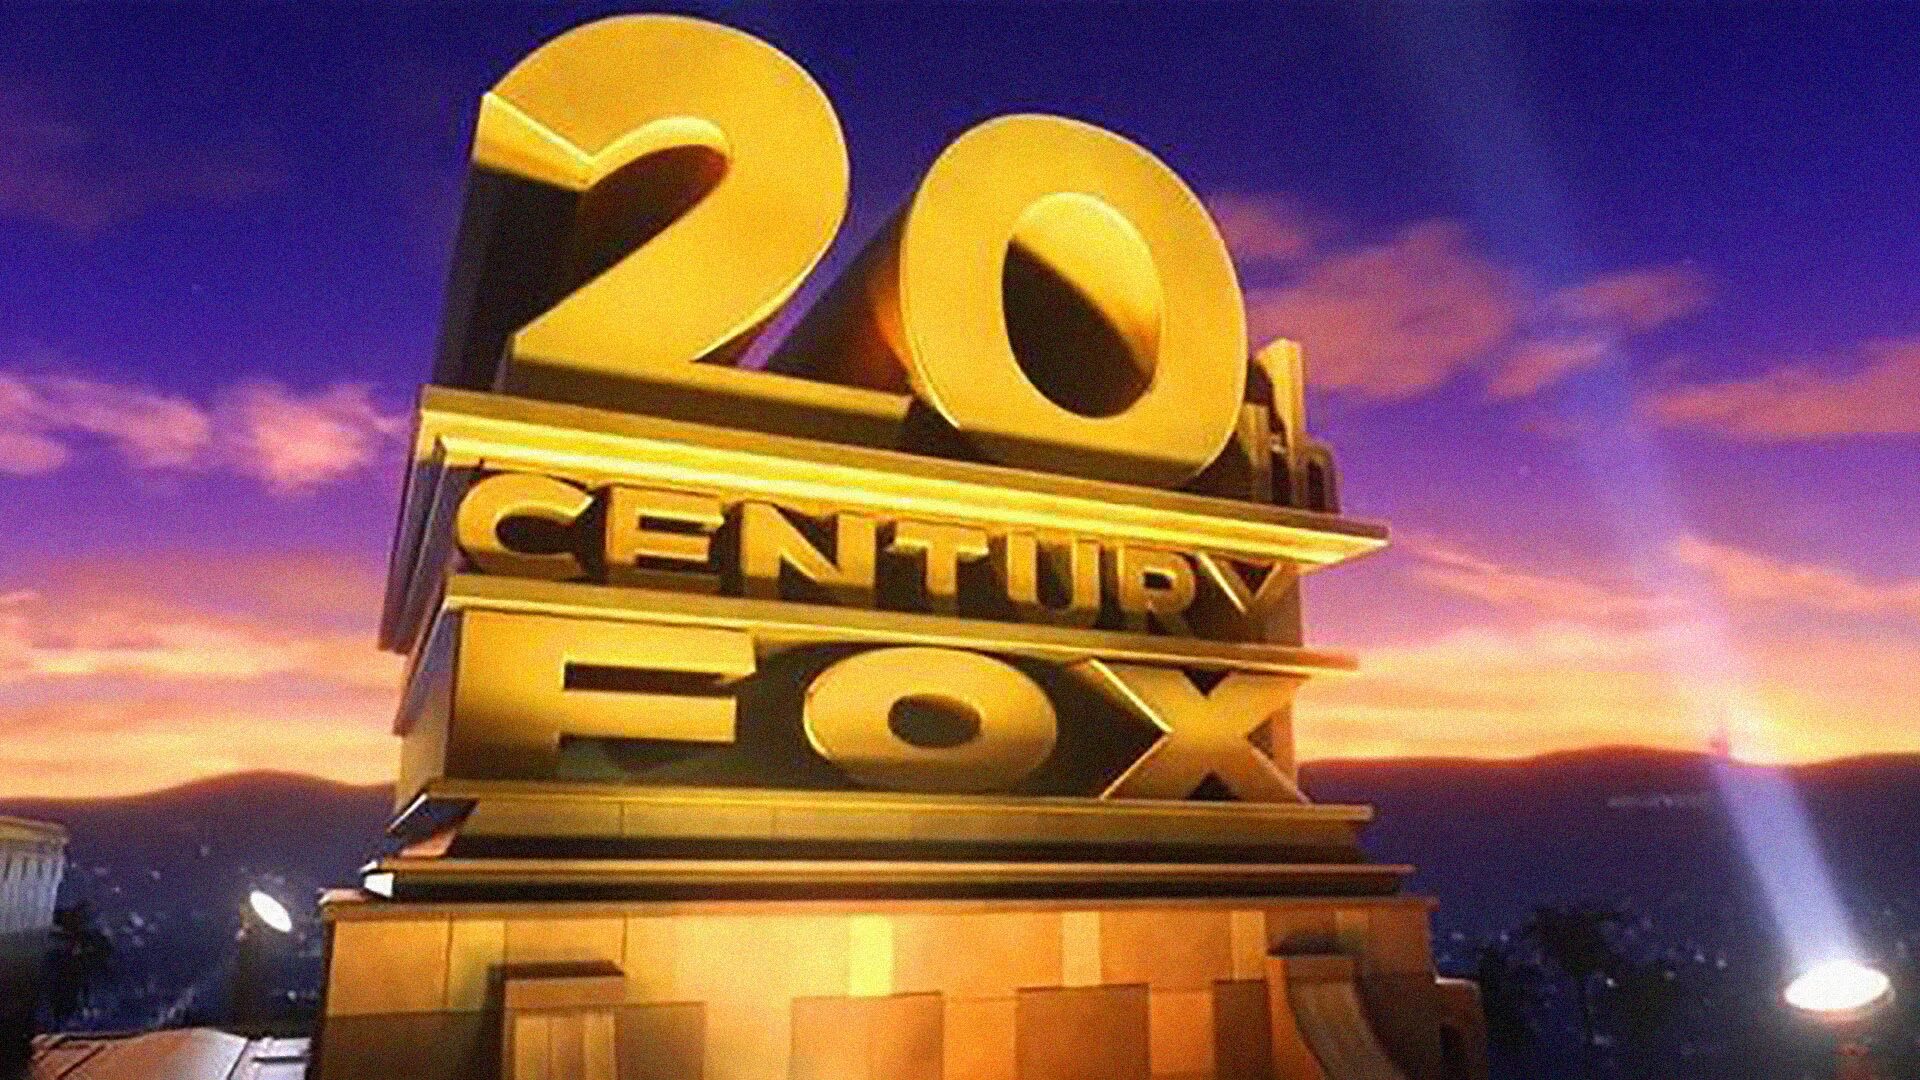 Th fox. Двадцатый век Фокс студия. 20th Century Fox Rio. 20 Век Центури Фокс. 20 Век Фокс Пикчерз.